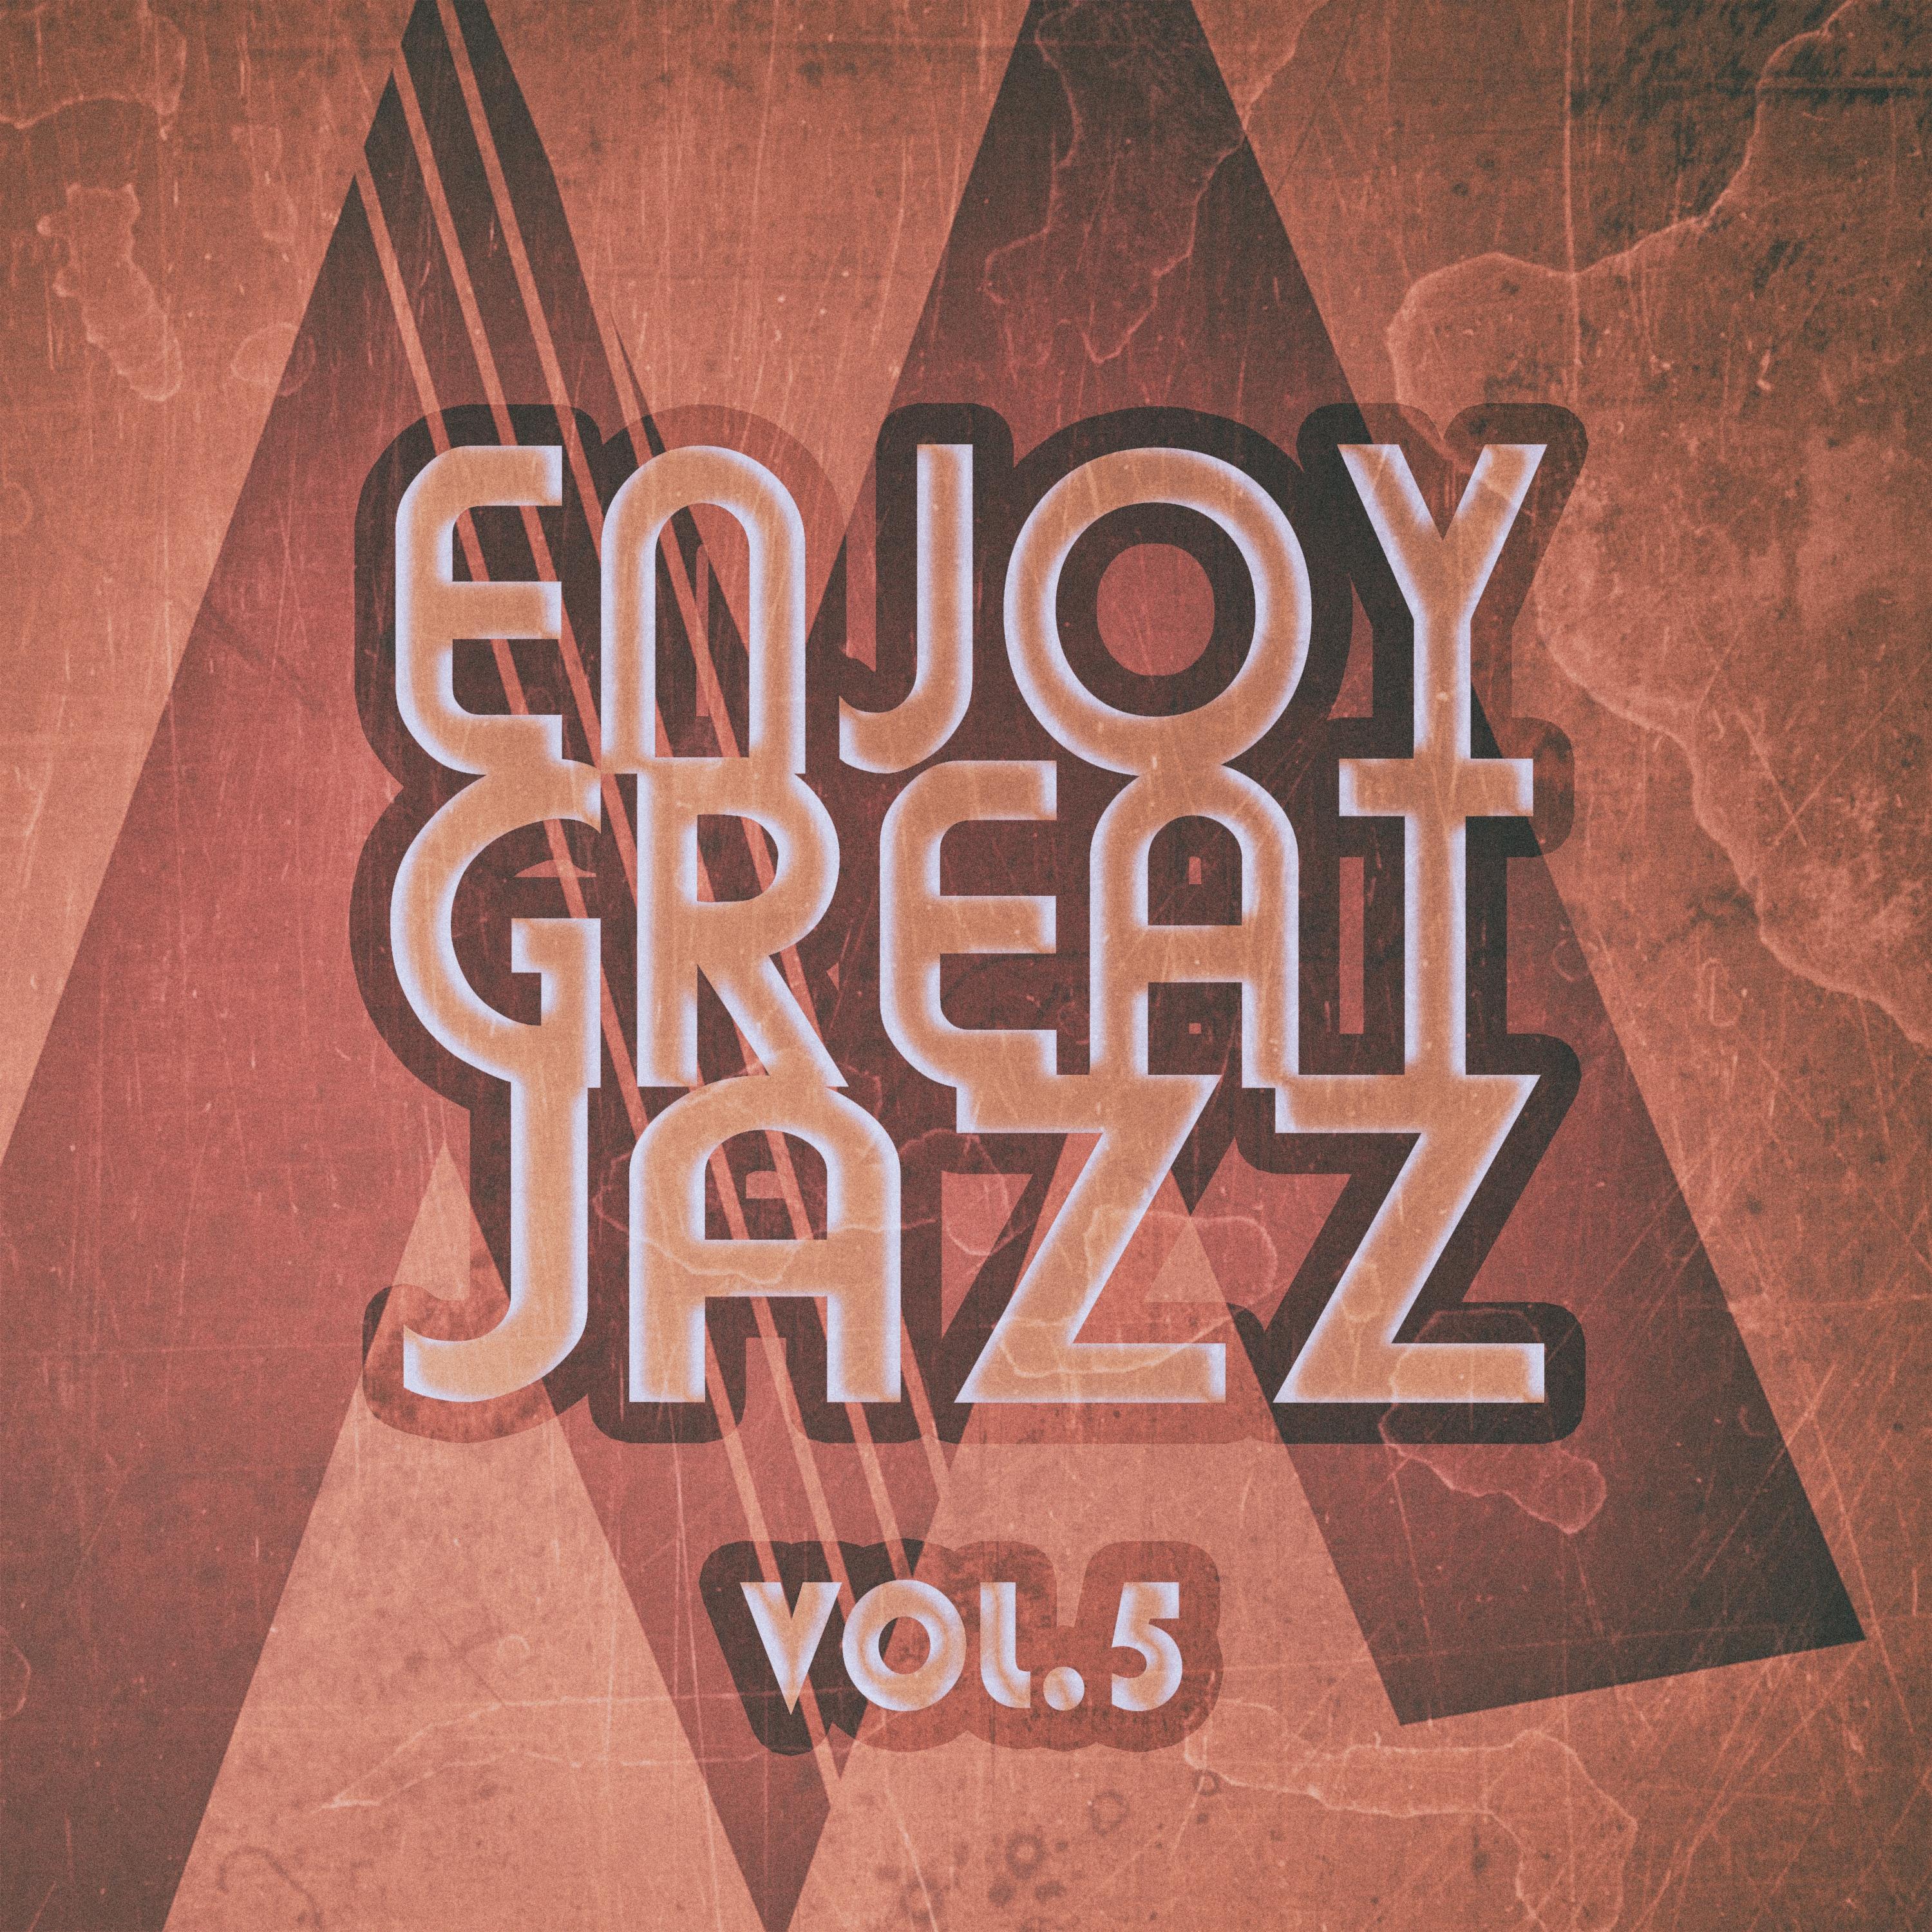 Enjoy Great Jazz - Vol.5